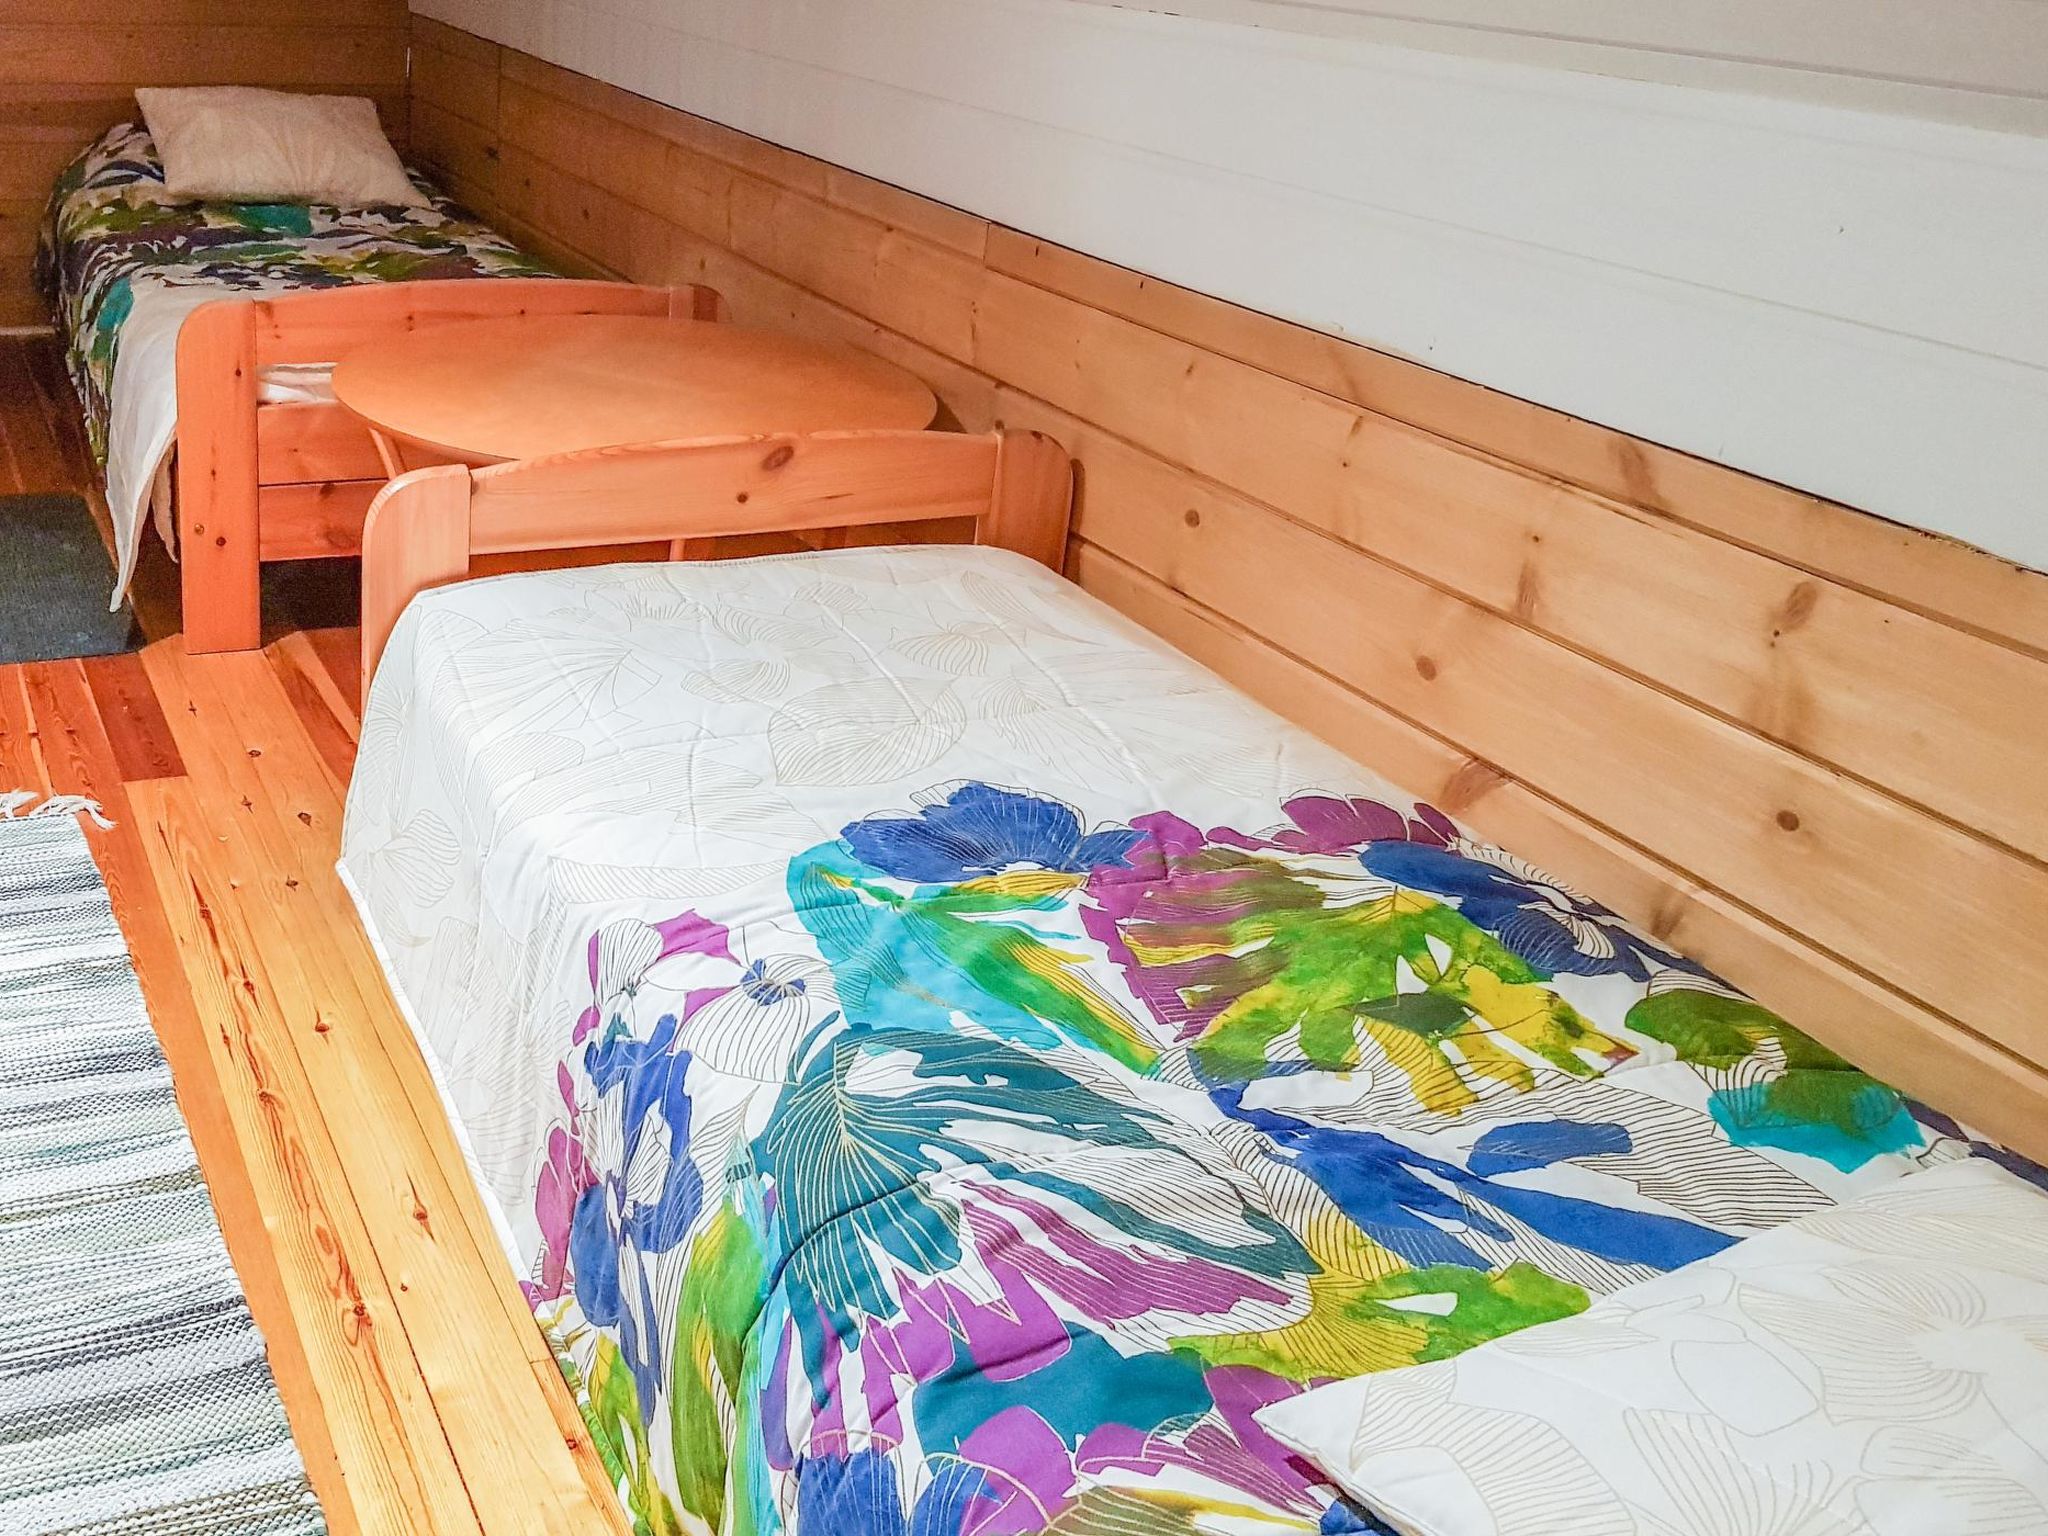 Photo 21 - 2 bedroom House in Kuusamo with sauna and mountain view